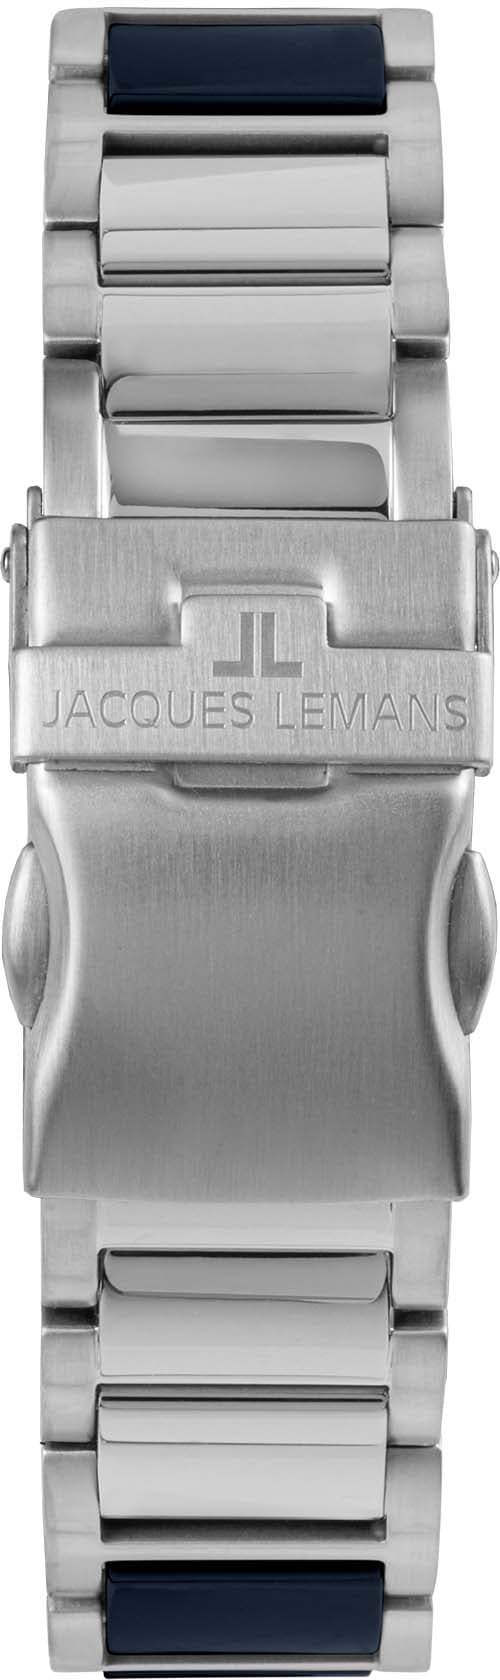 Jacques Lemans Keramikuhr »Liverpool, 42-10B« bei OTTO online bestellen